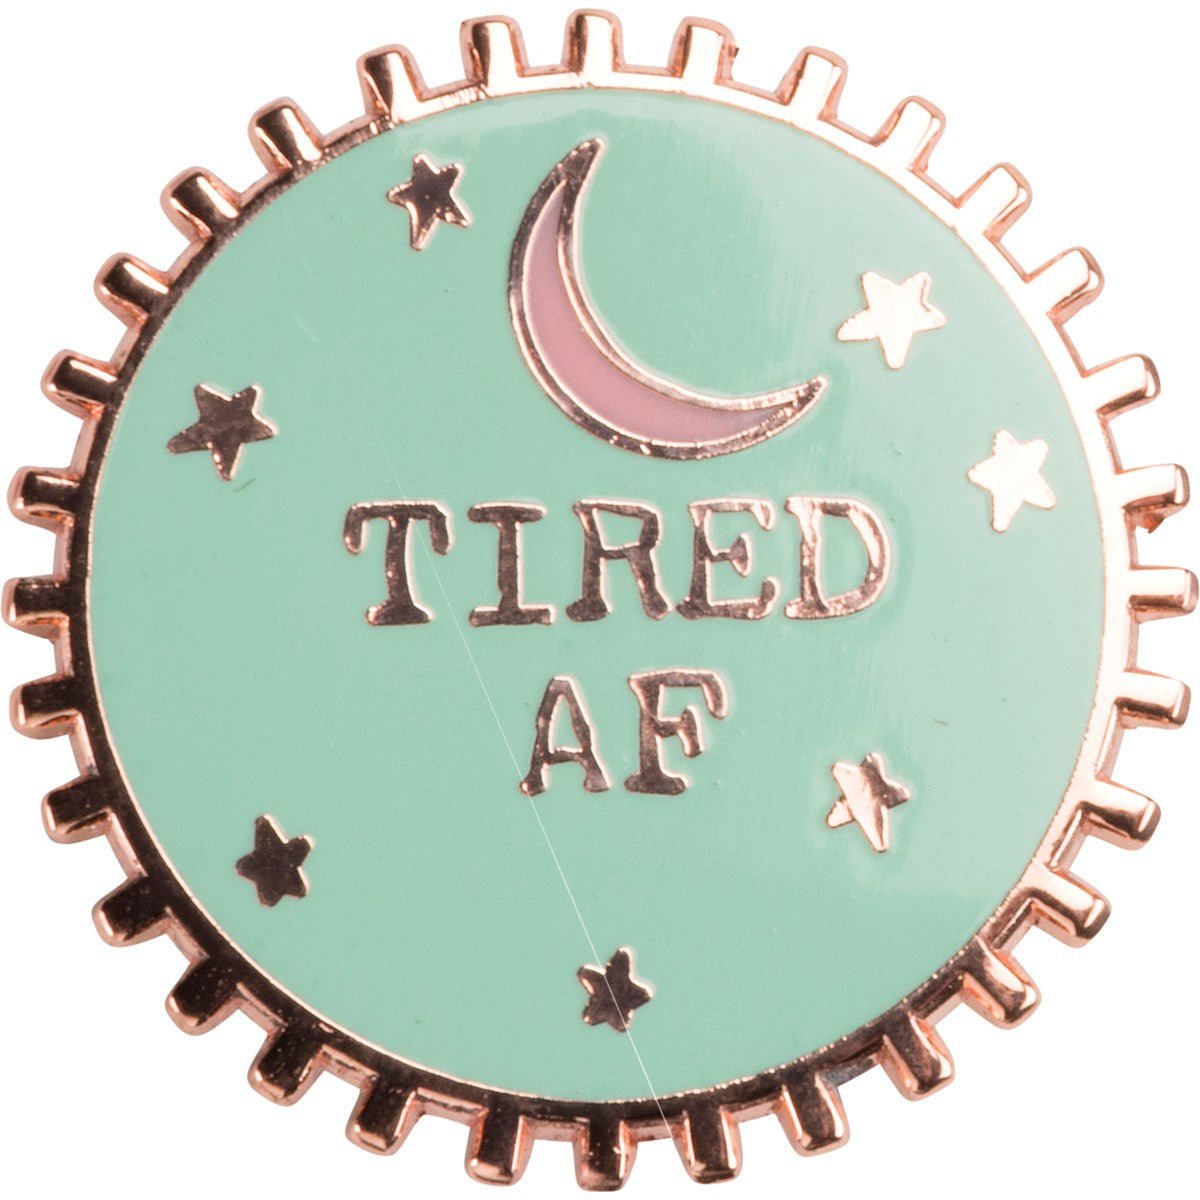 Tired AF Enamel Pin on Gift Card